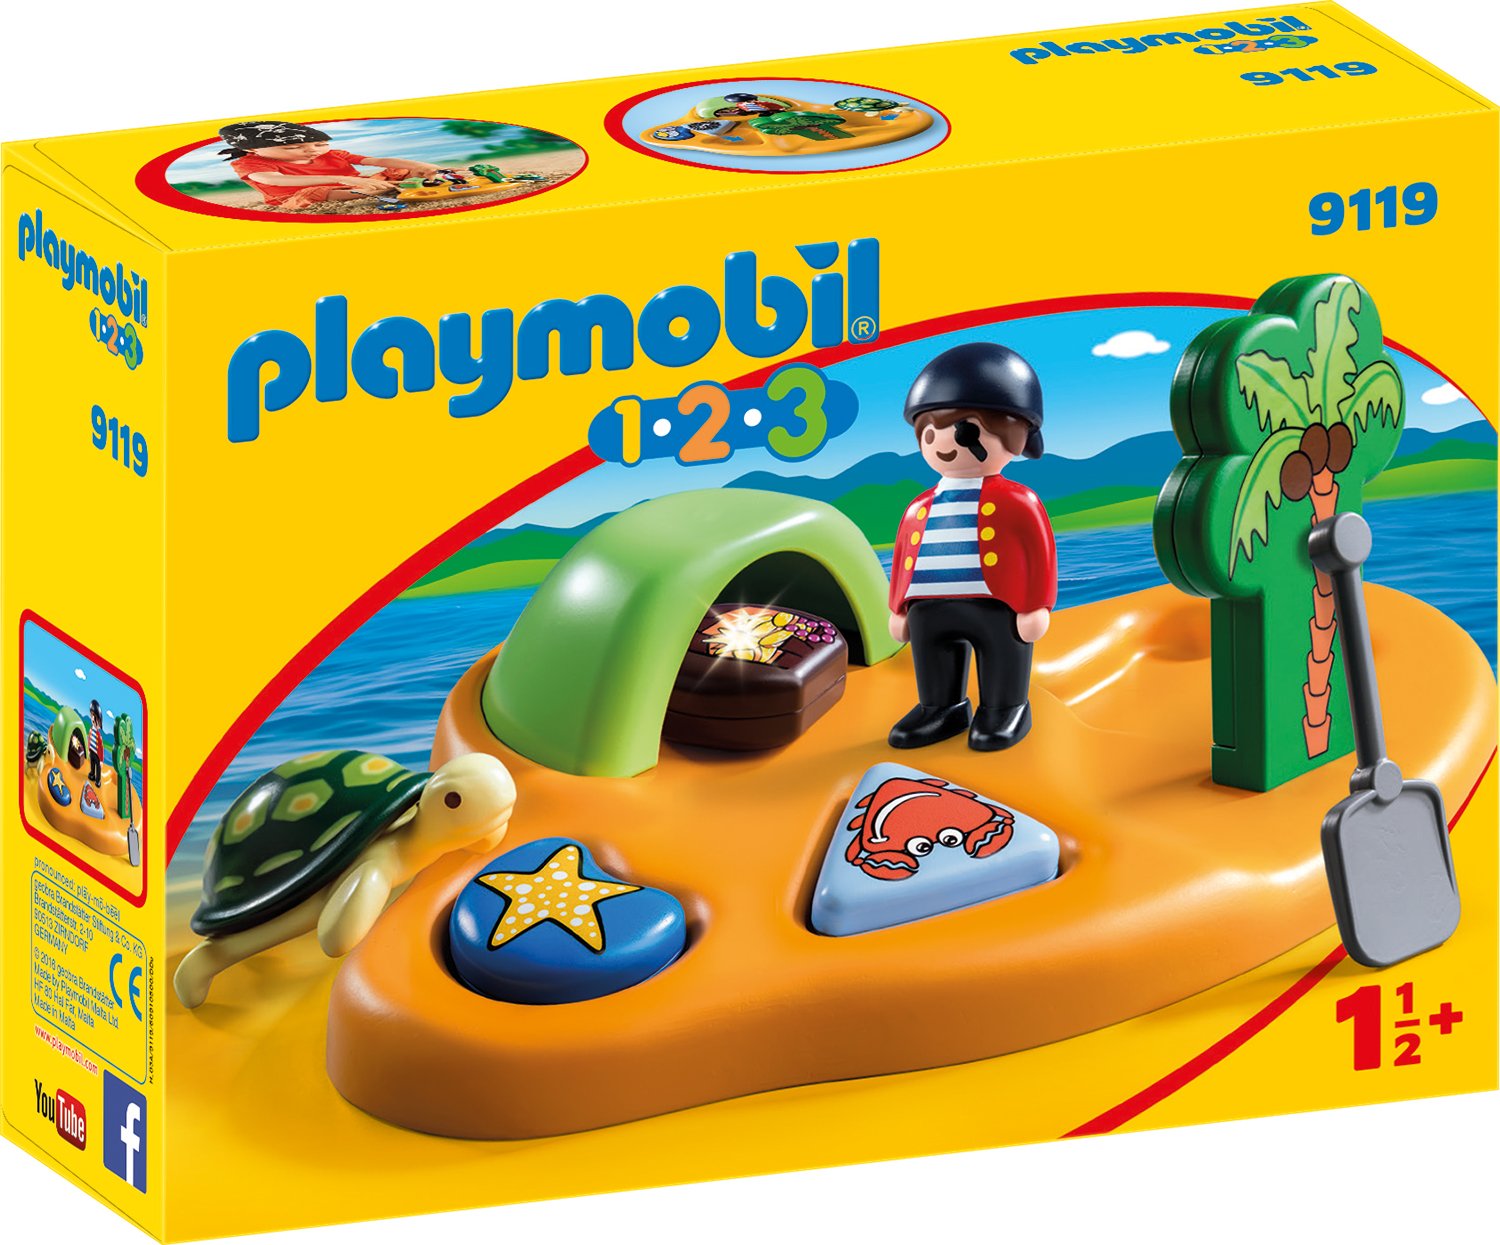 Playmobil Pirate Island Design